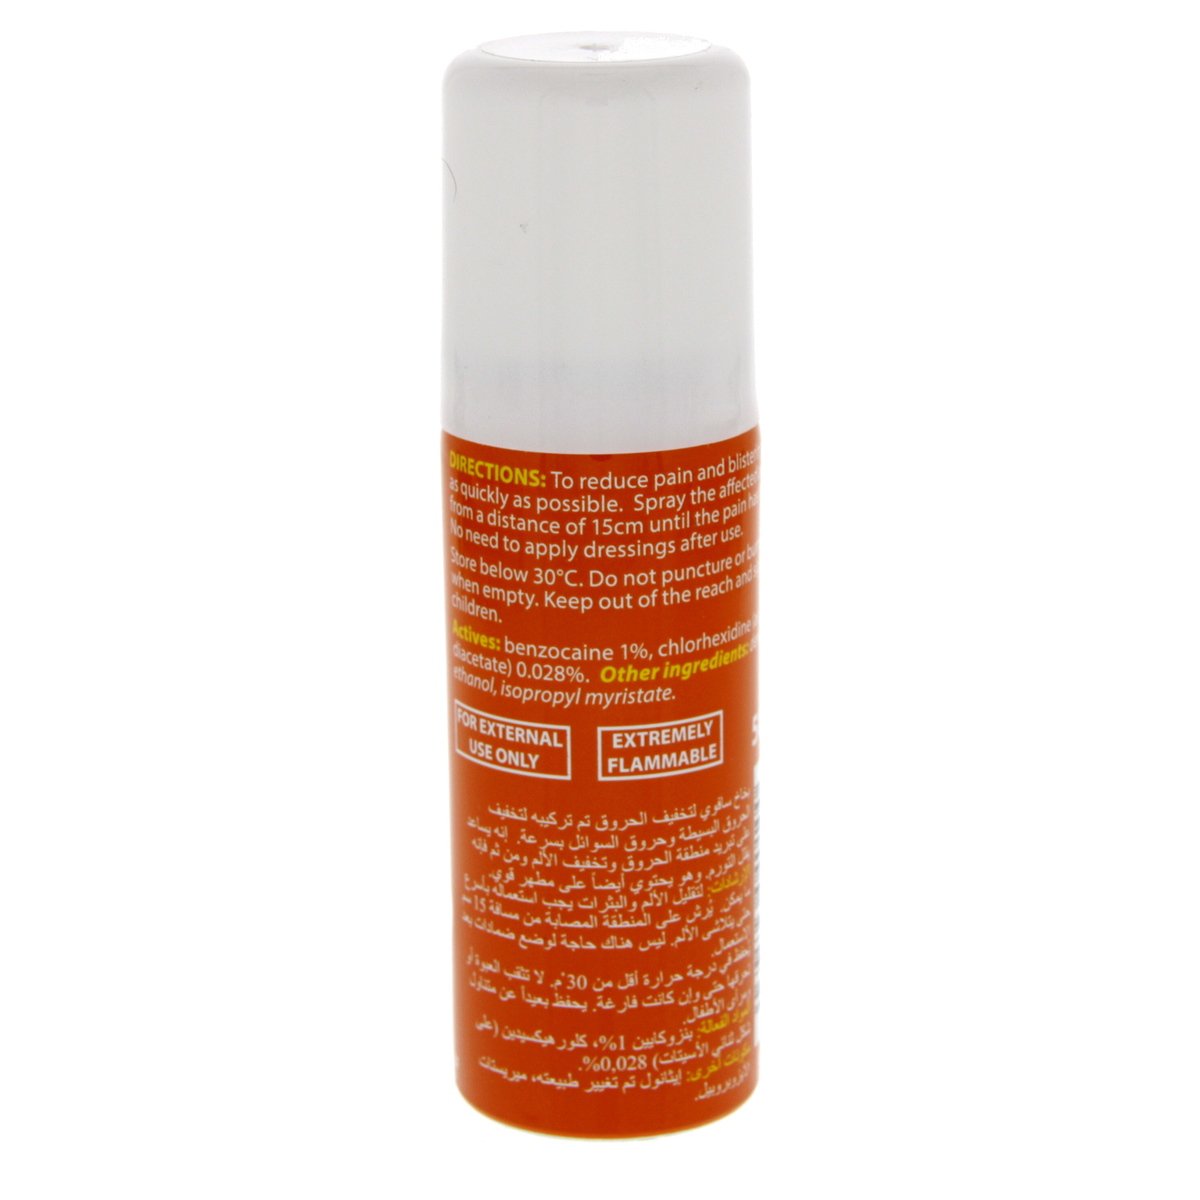 Savoy Antiseptic Burn Relief Spray 50 ml